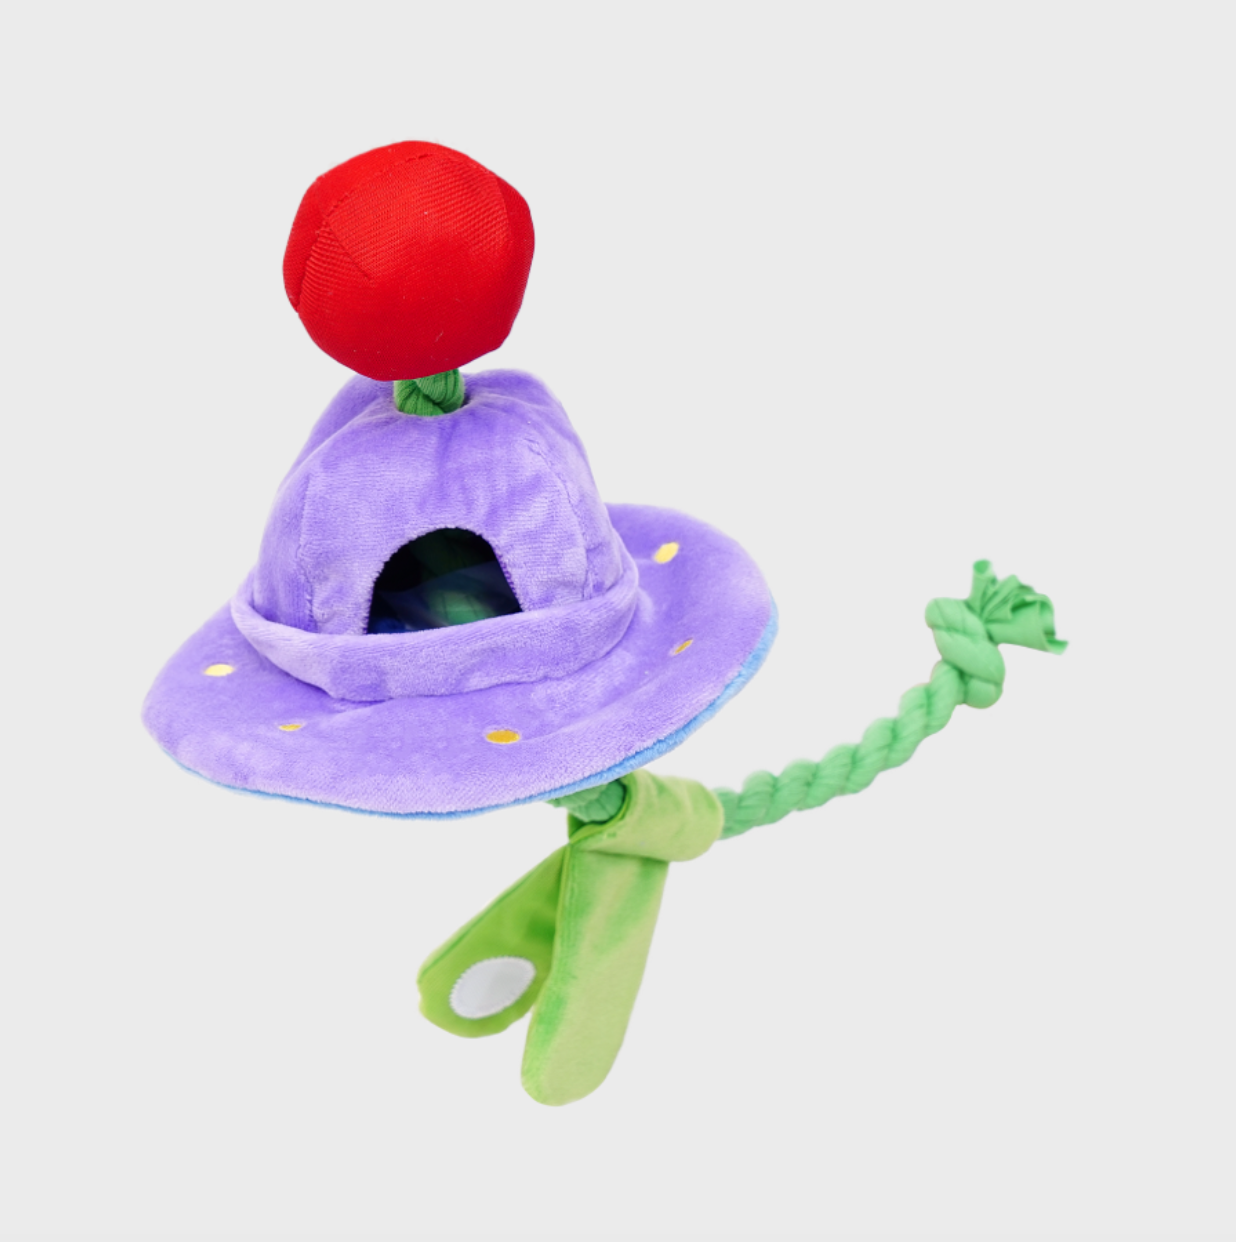 UFO tug toy